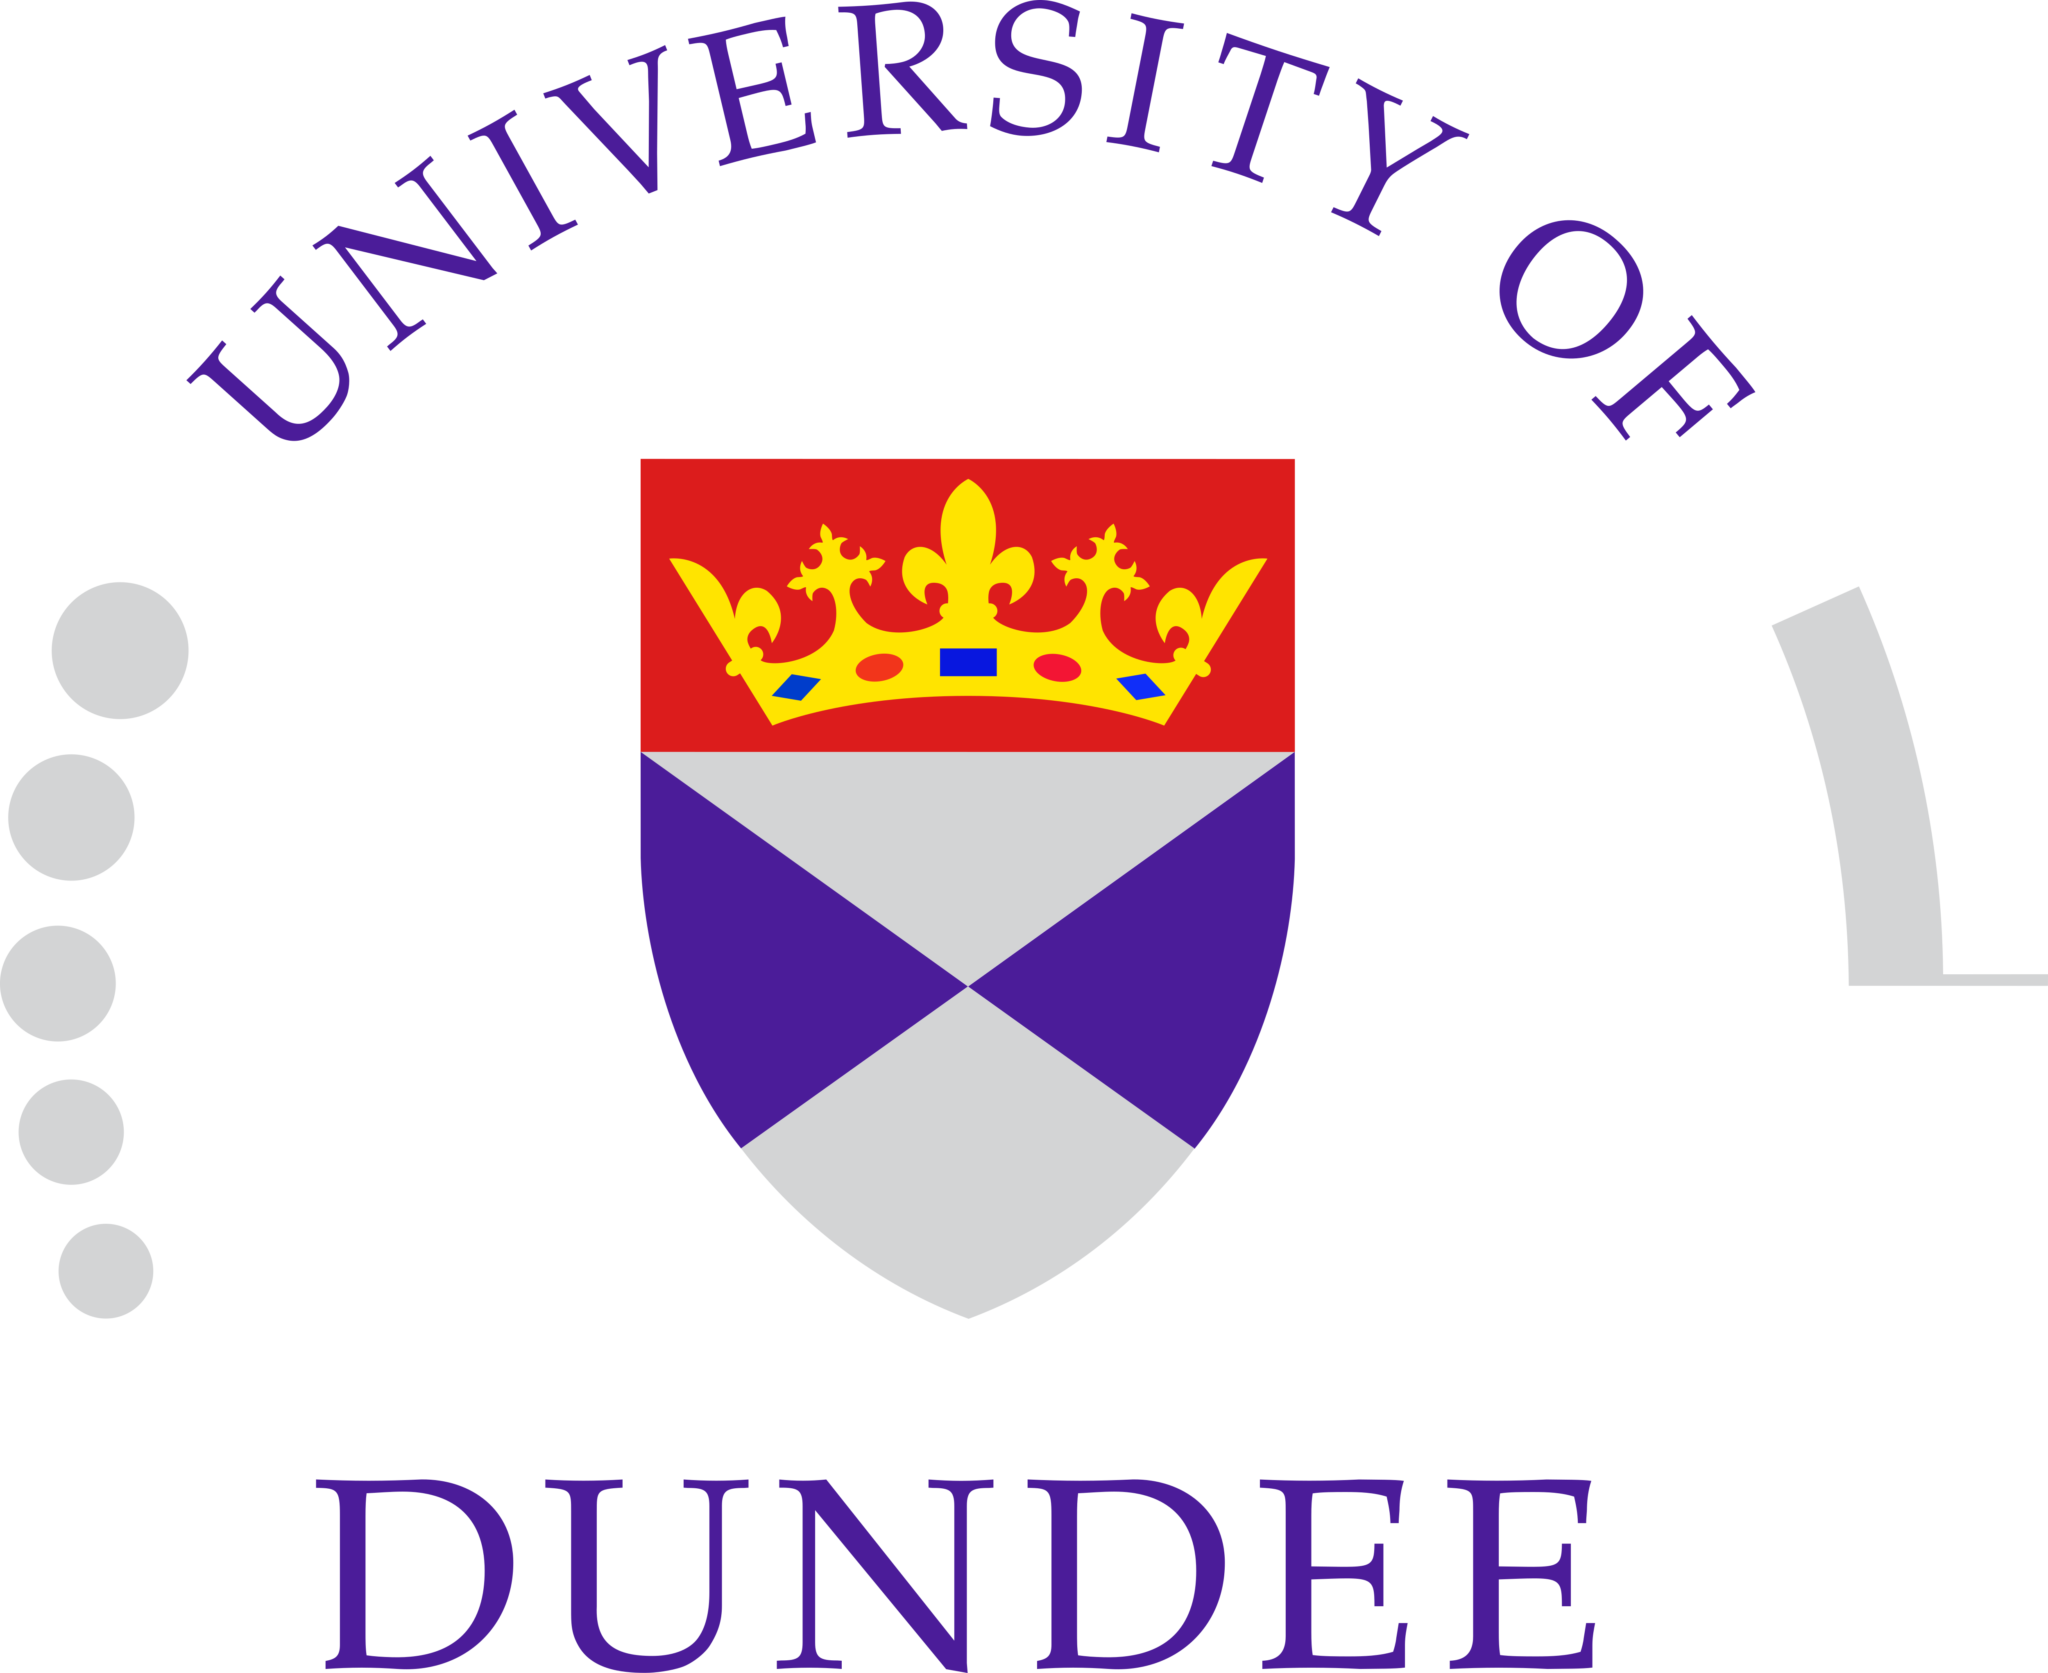 University of Dundee Logos Download